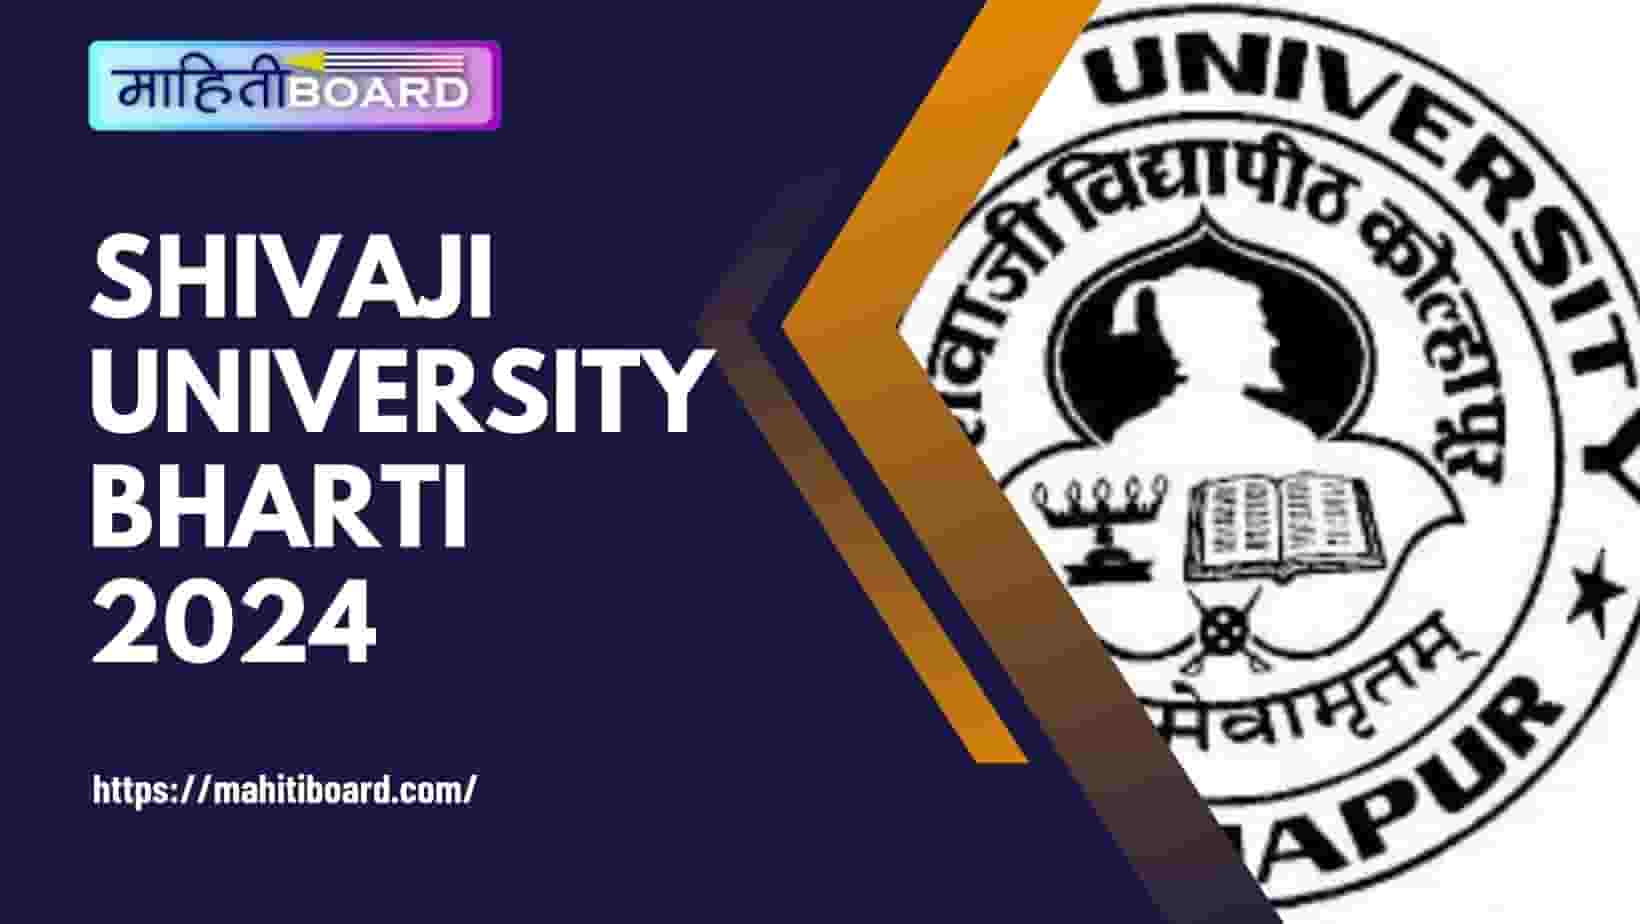 Shivaji University Bharti 2024